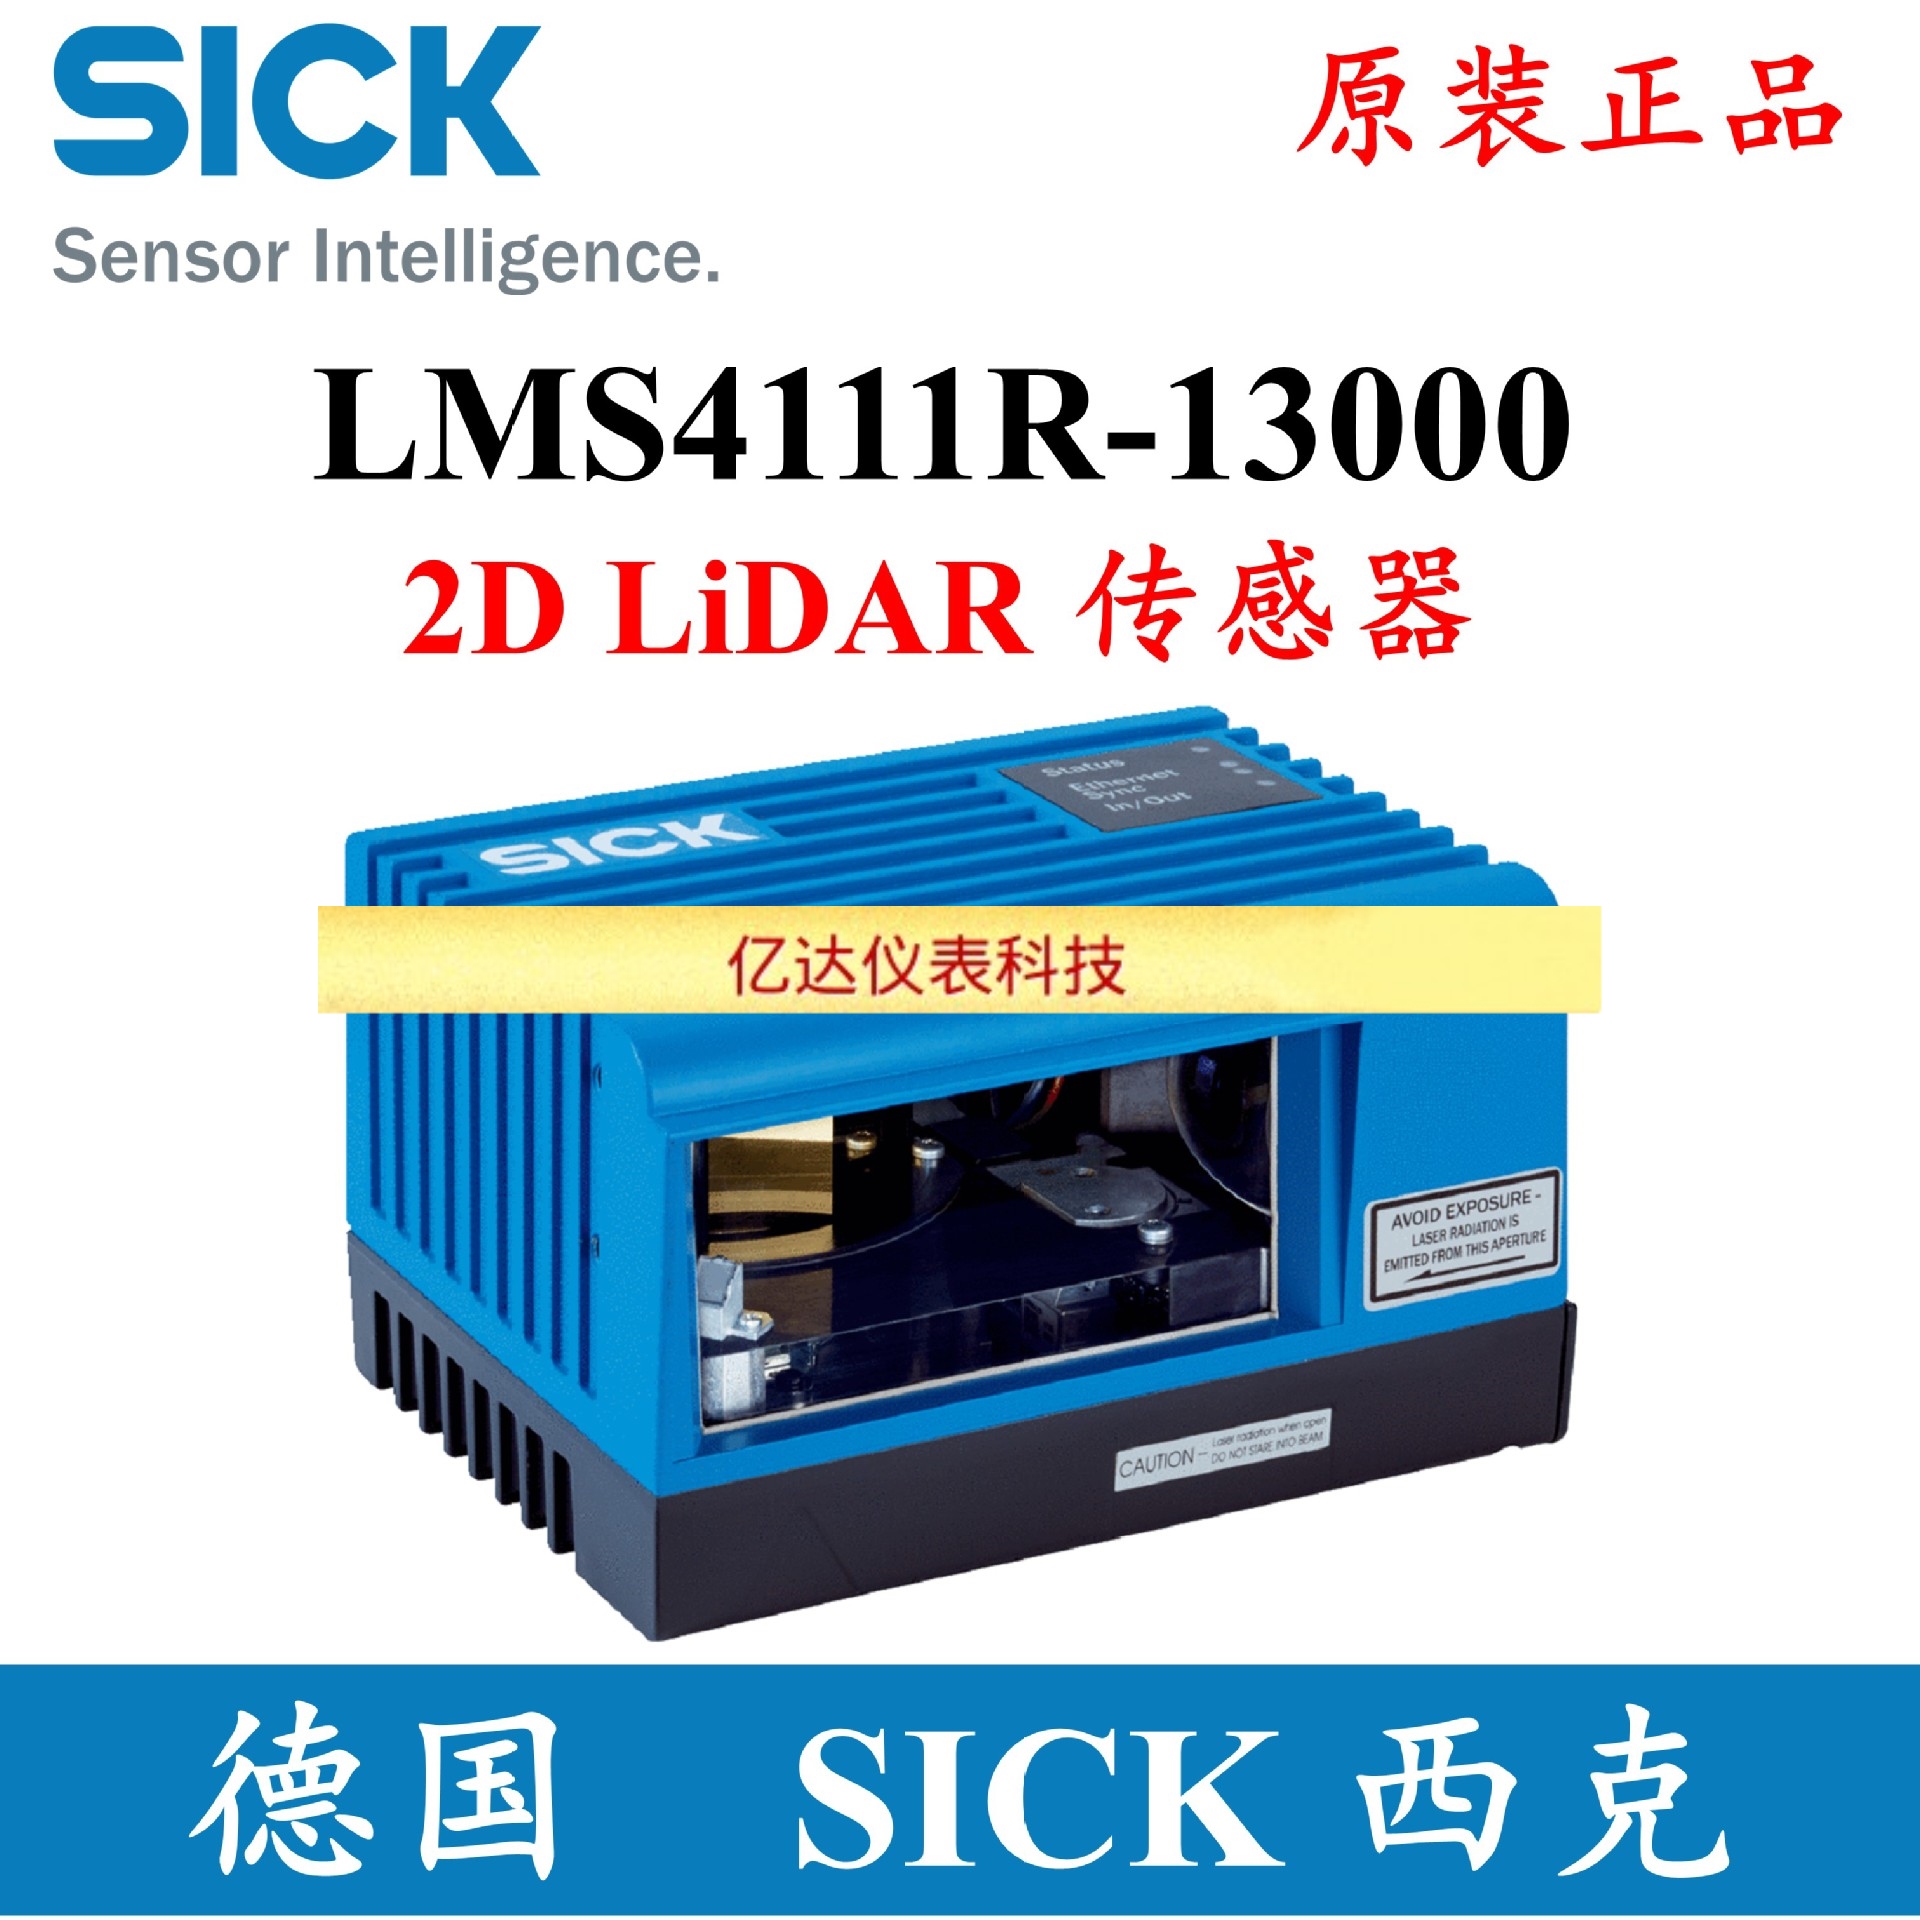 SICK西克2D LiDAR传感器室内激光扫描测量激光雷达LMS411拍前询价